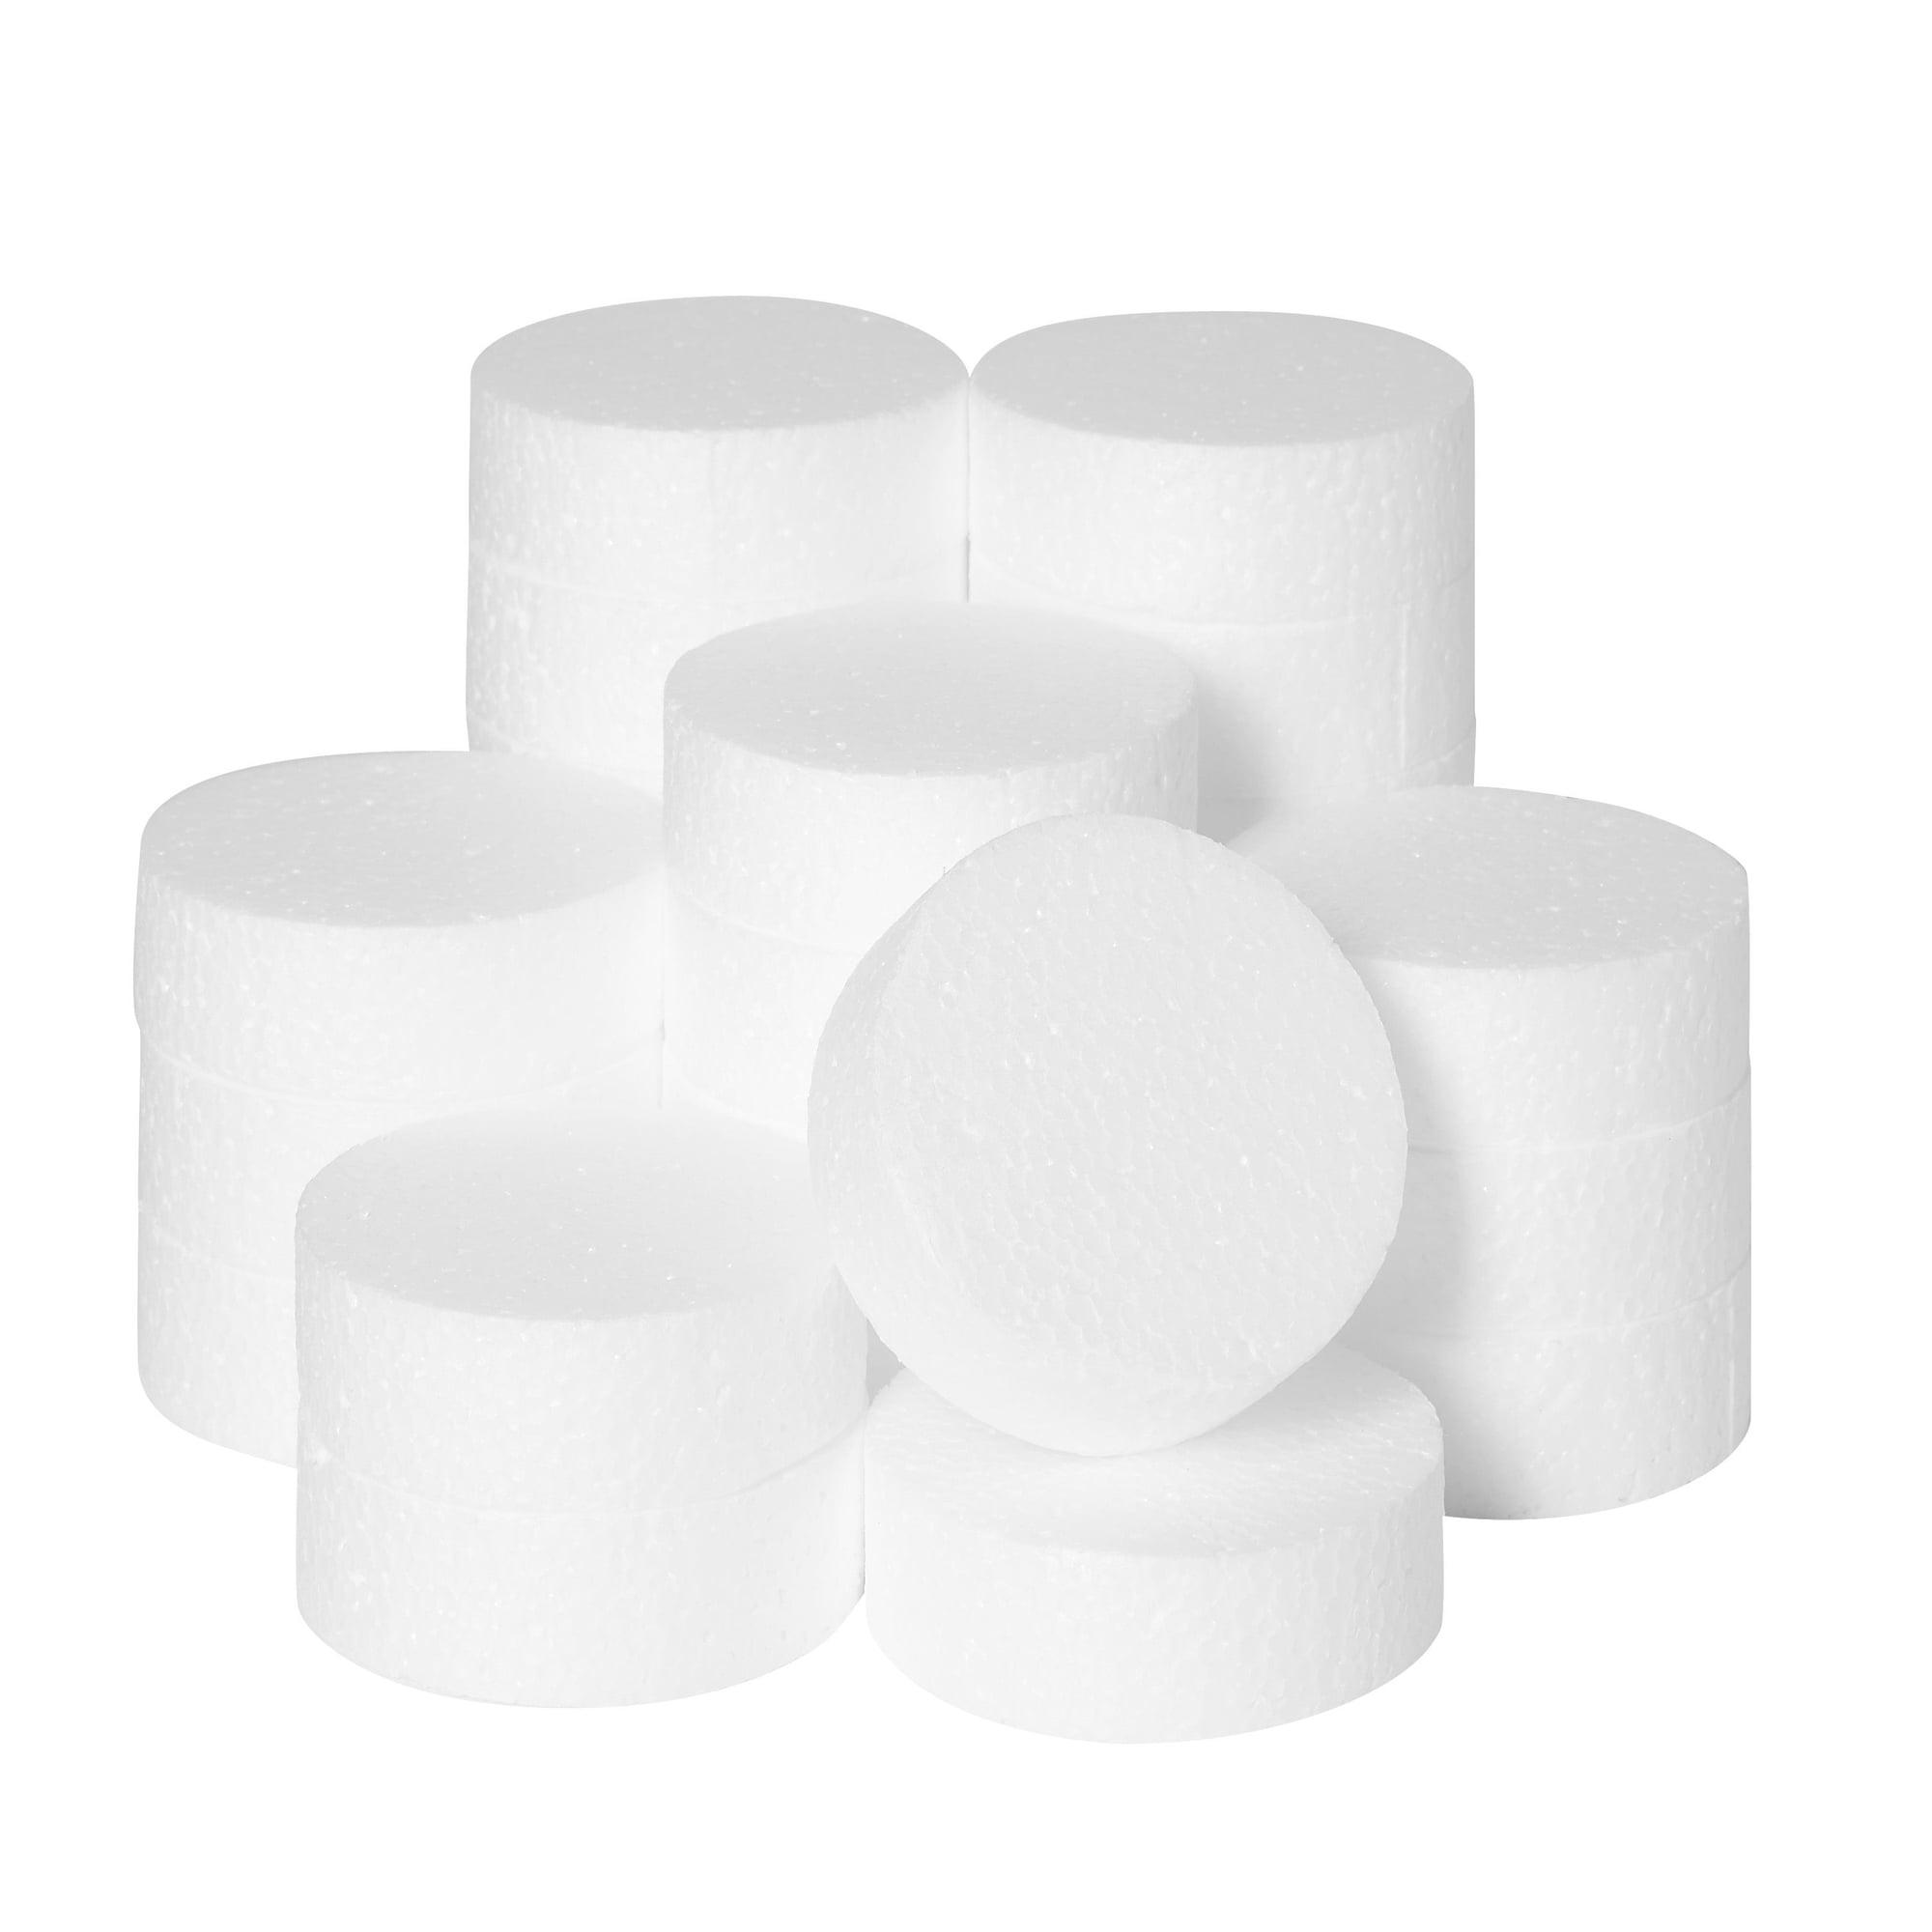  ZOOFOX 7 Pack 12 Inch Foam Circles, Round Polystyrene